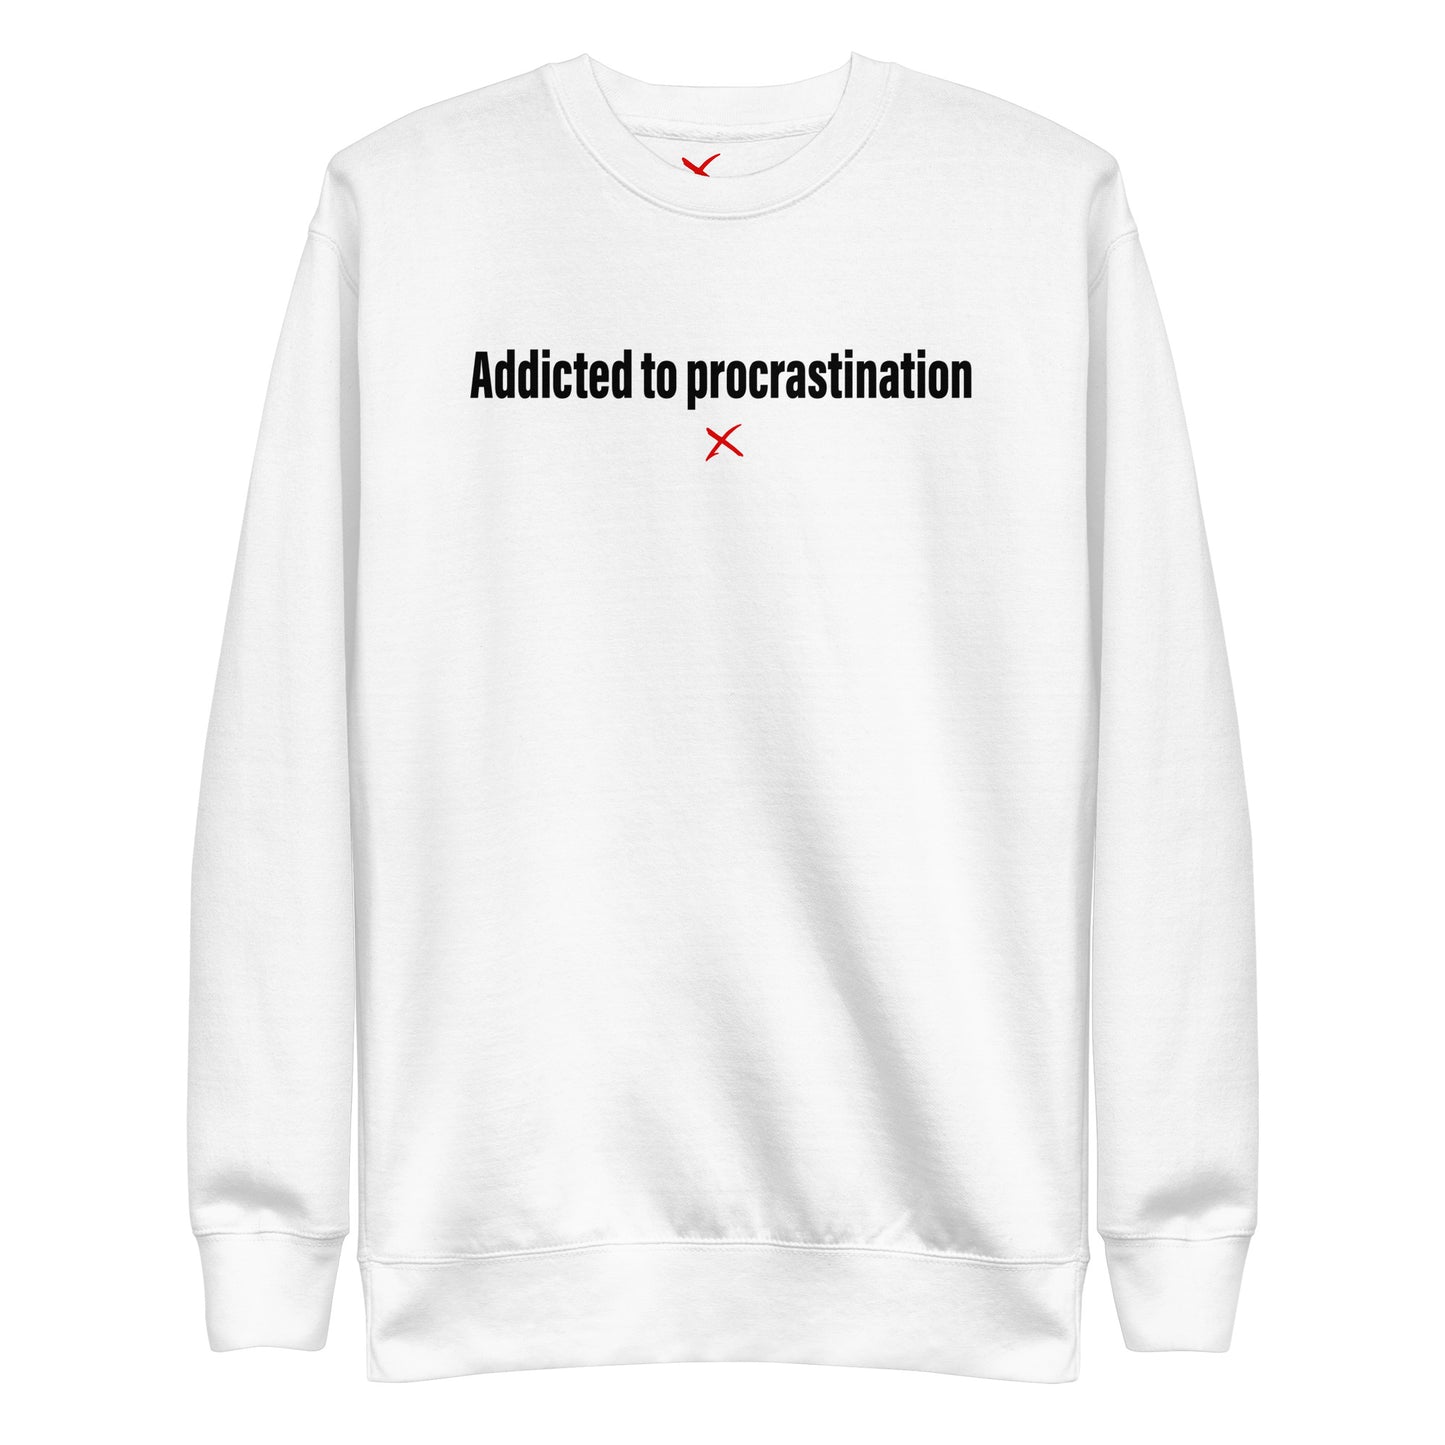 Addicted to procrastination - Sweatshirt